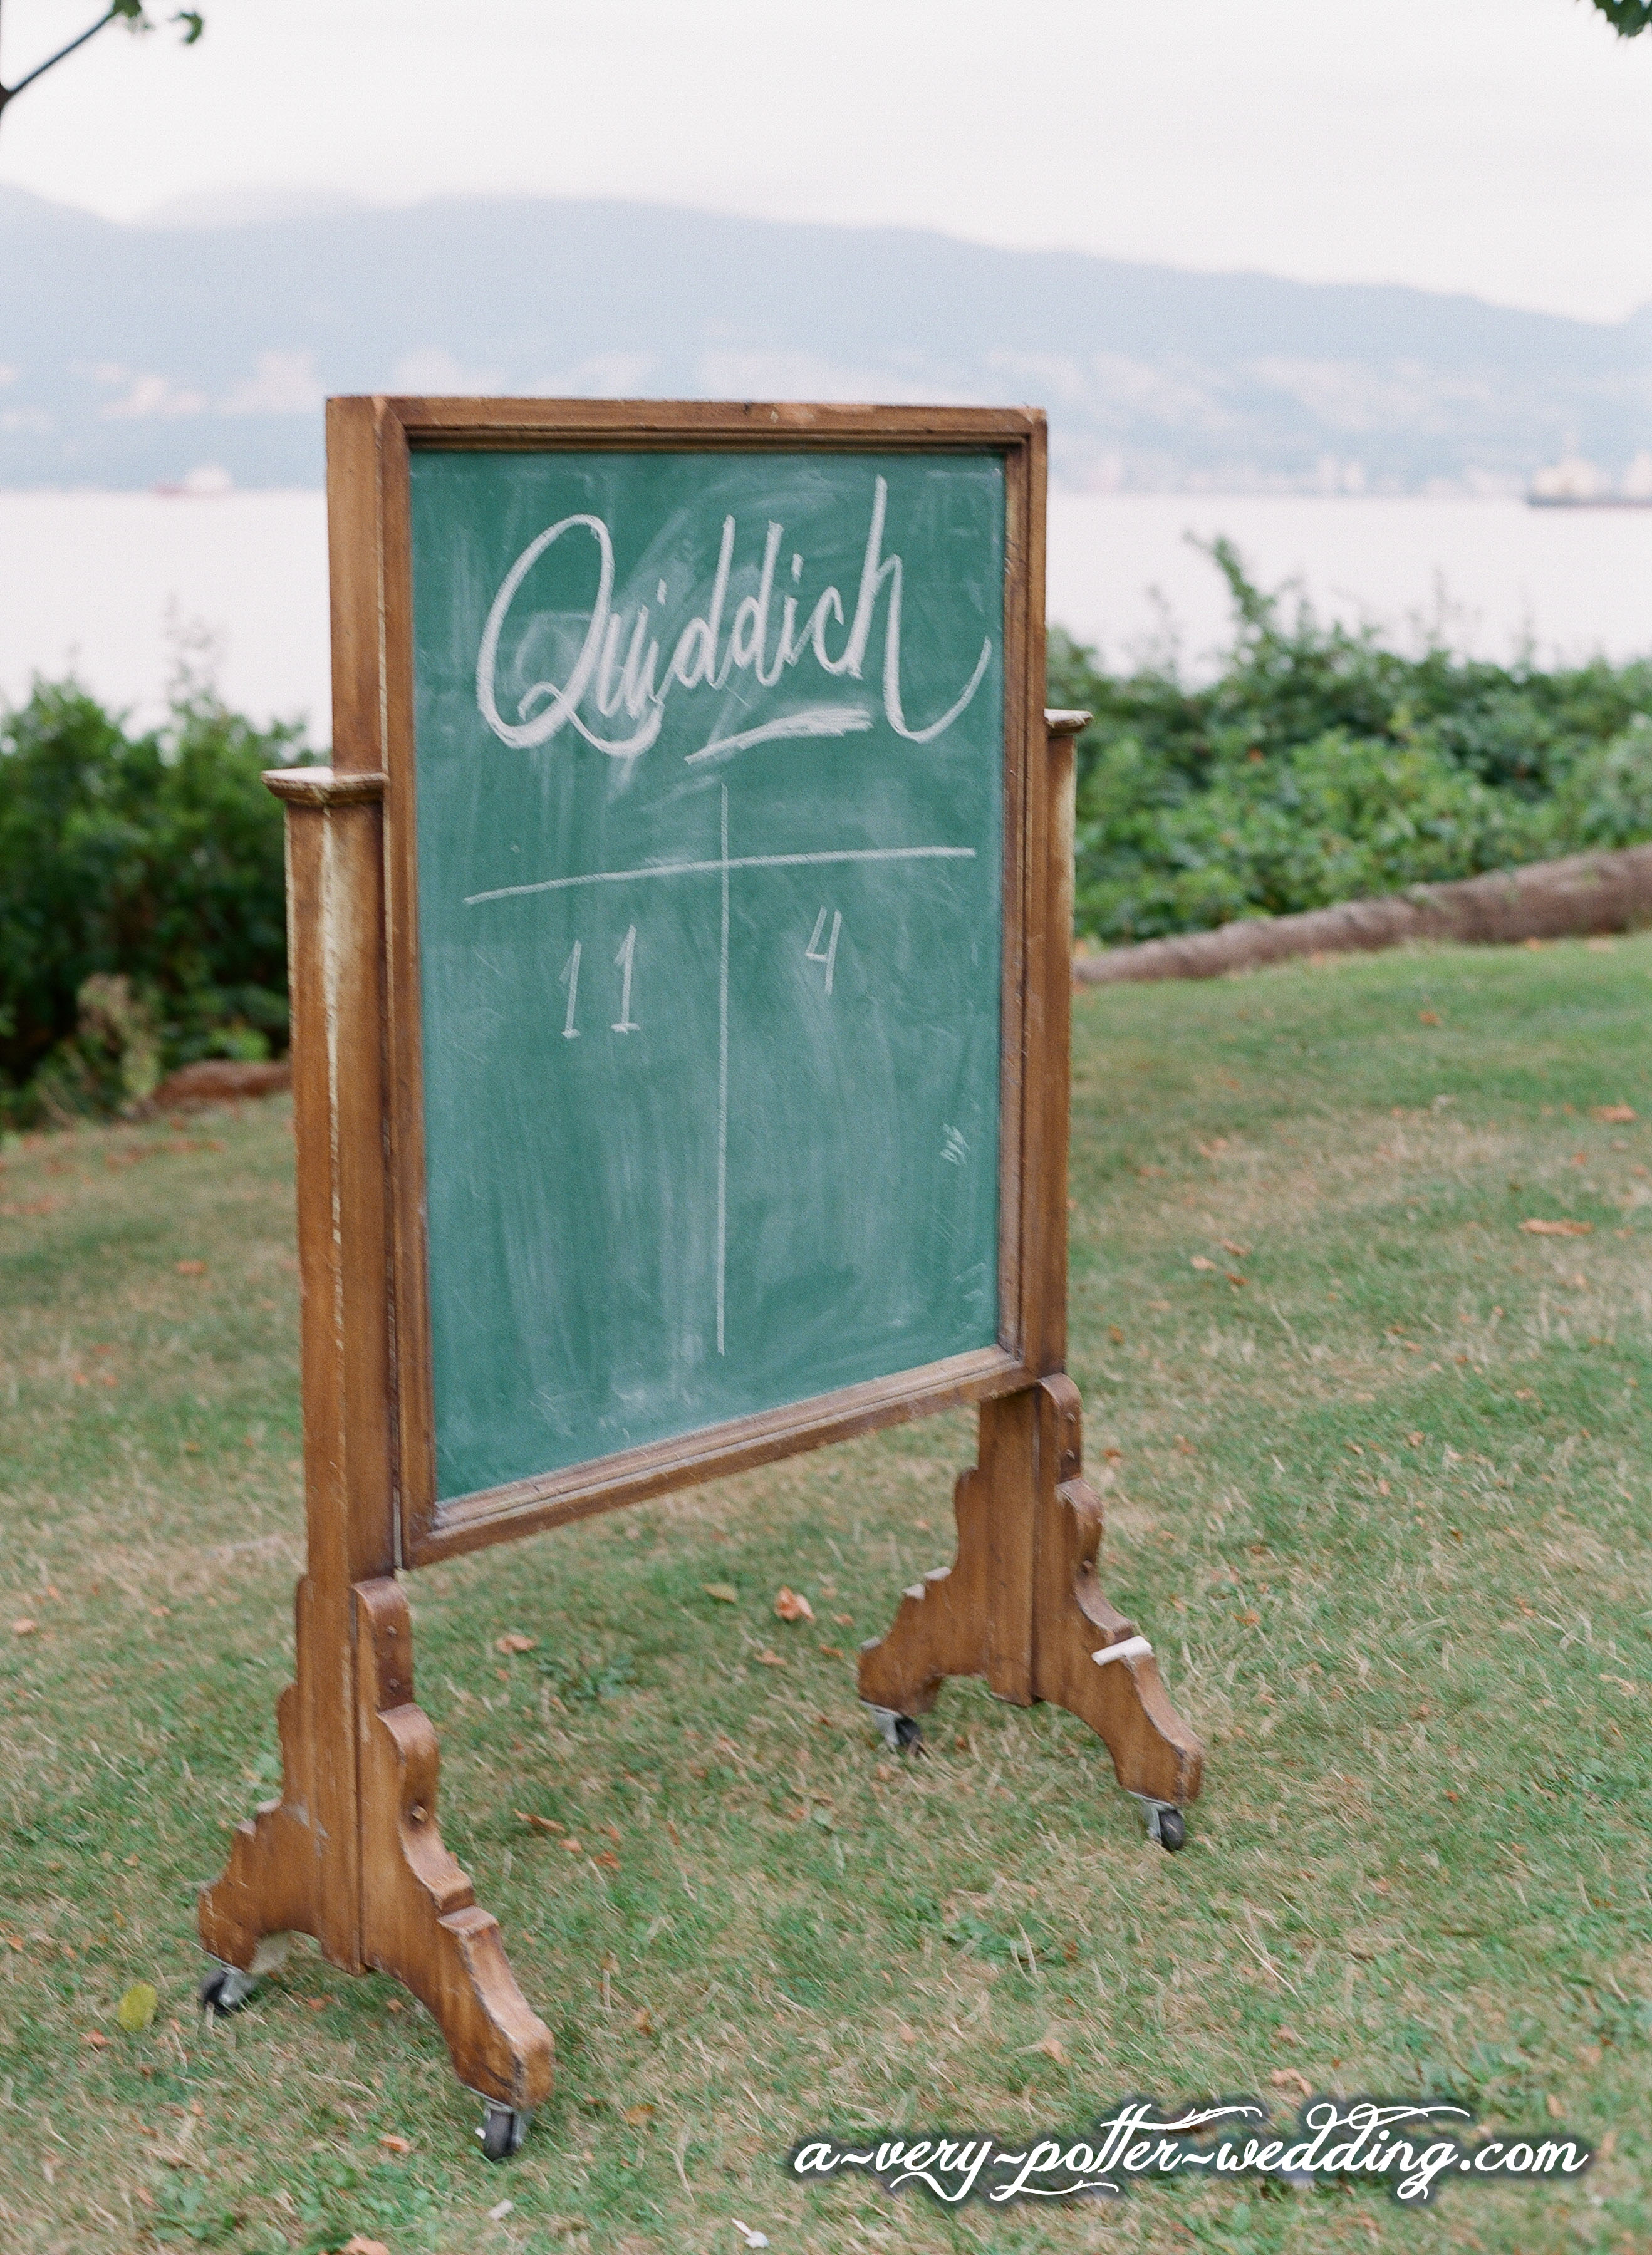 Vintage chalk board keeping quidditch score